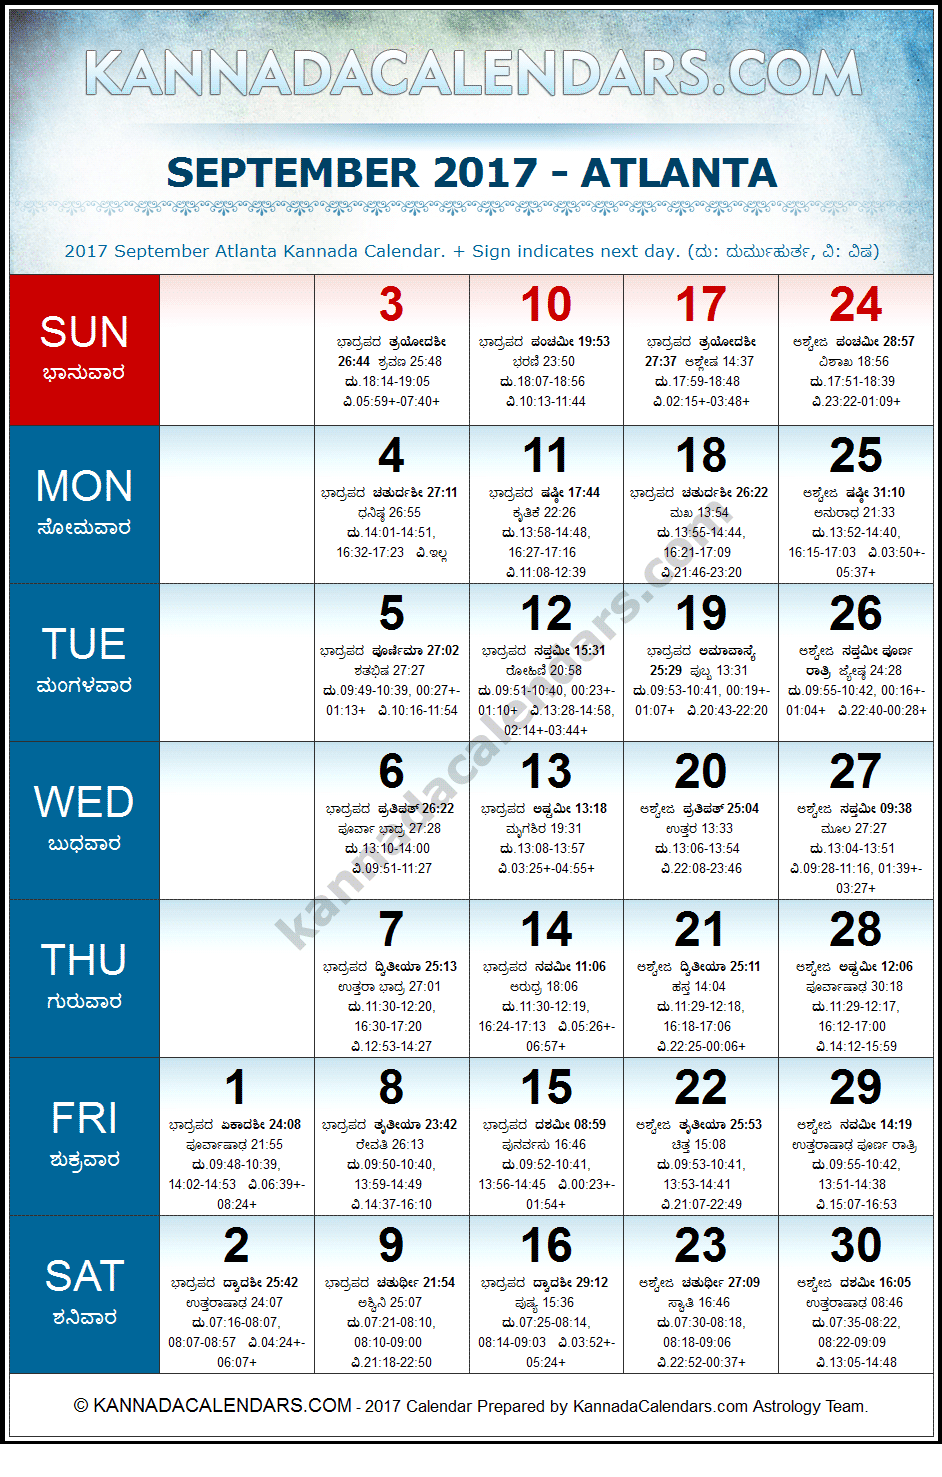 September 2017 Kannada Calendar for Atlanta, USA